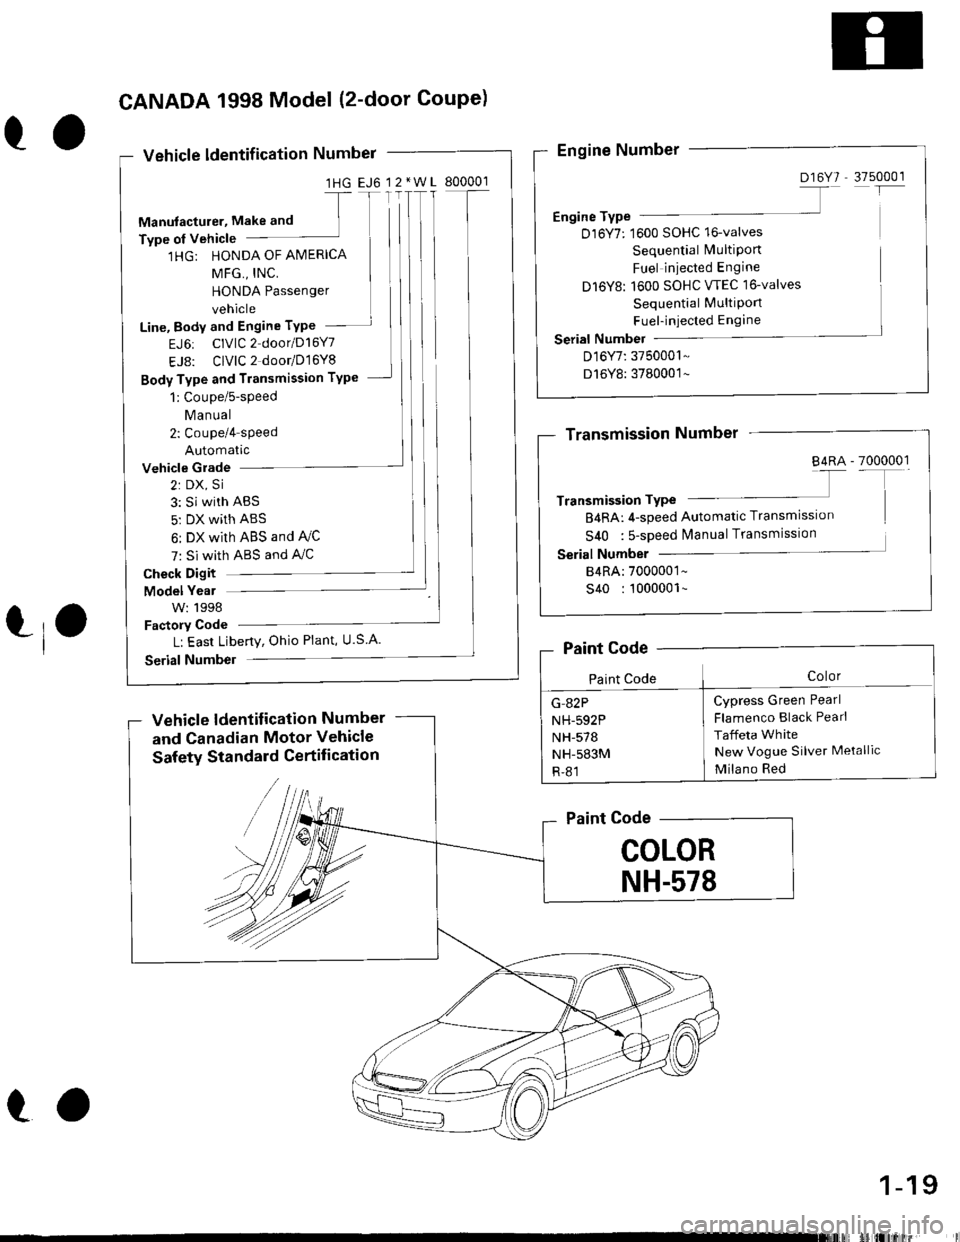 HONDA CIVIC 1996 6.G Workshop Manual Vehicle ldentif ication Numbel
1HG EJ6 12*W
1HG: HONDA OF AMERICA
MFG,, INC,
HONDA Passenger
vehicle
Line, Body and Engine TYPe
EJ6: CIVIC 2 door/D16Y7
EJ8: CIVIC 2 dootD16Y8
Body Type and Transmissio